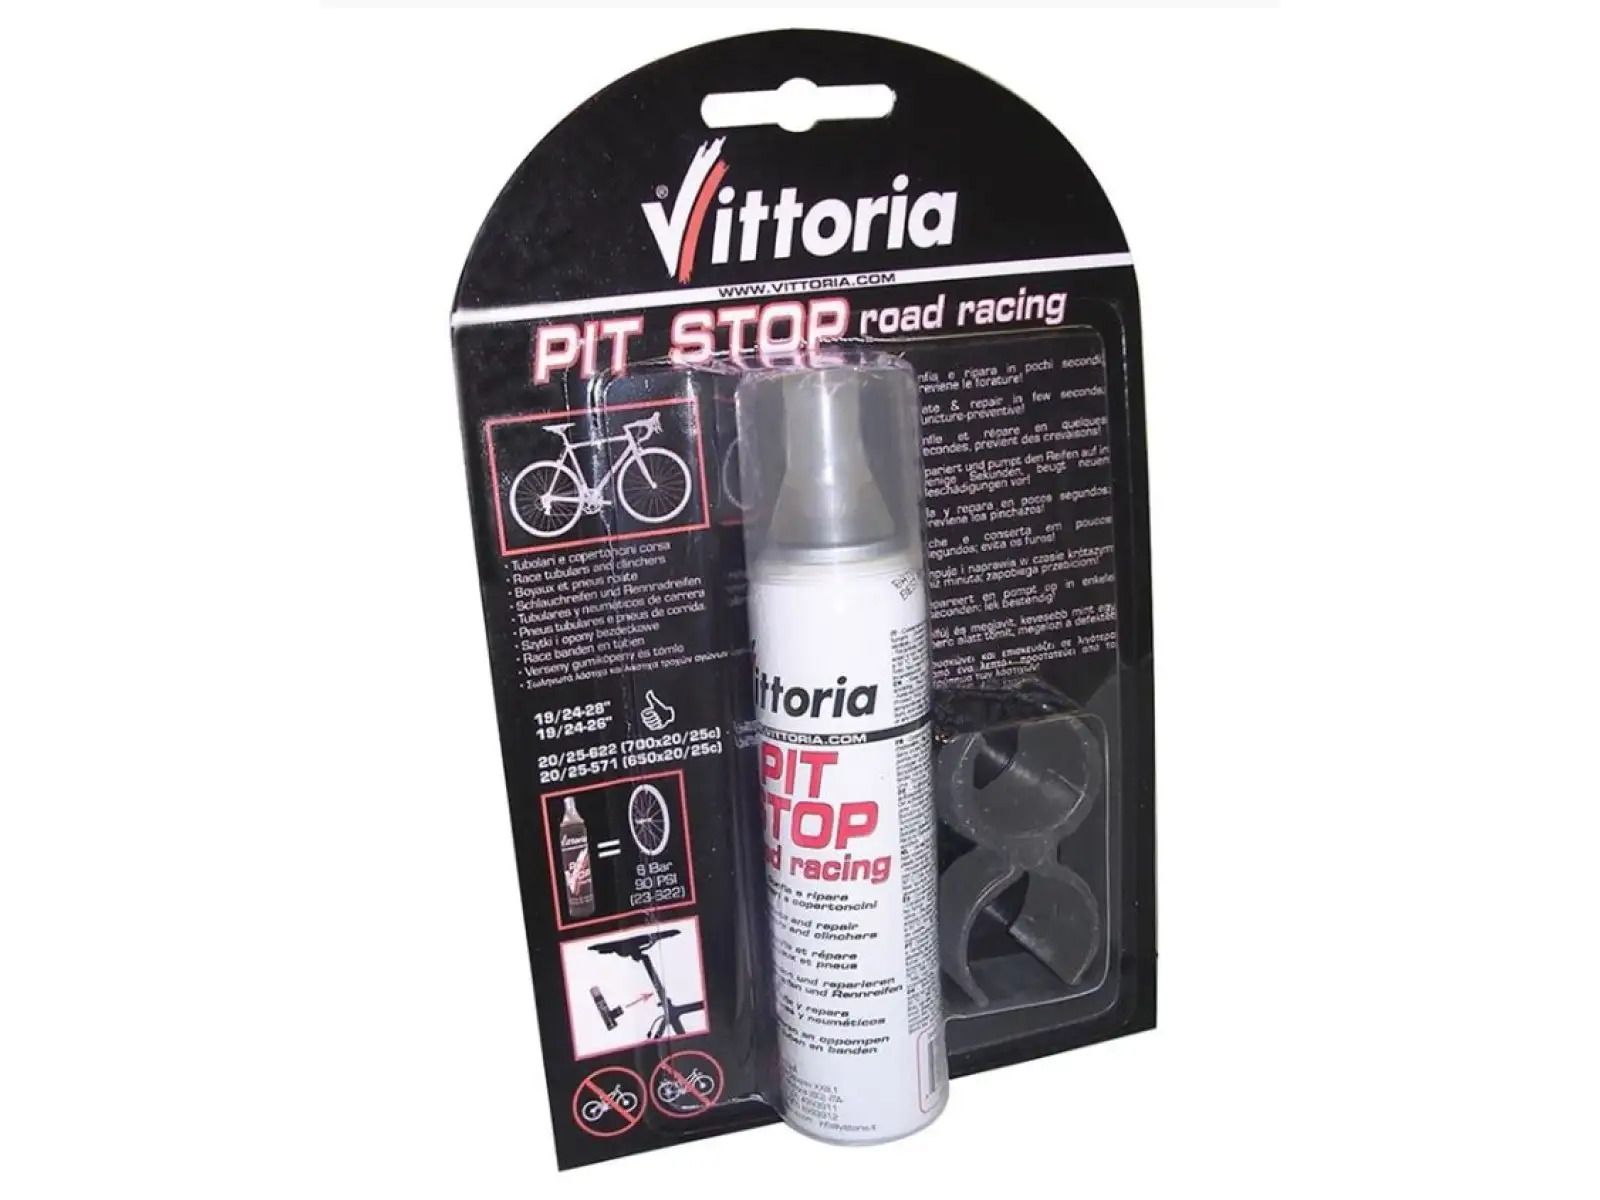 Vittoria Pit Stop Road Racing kit tmel 75ml +1 klip